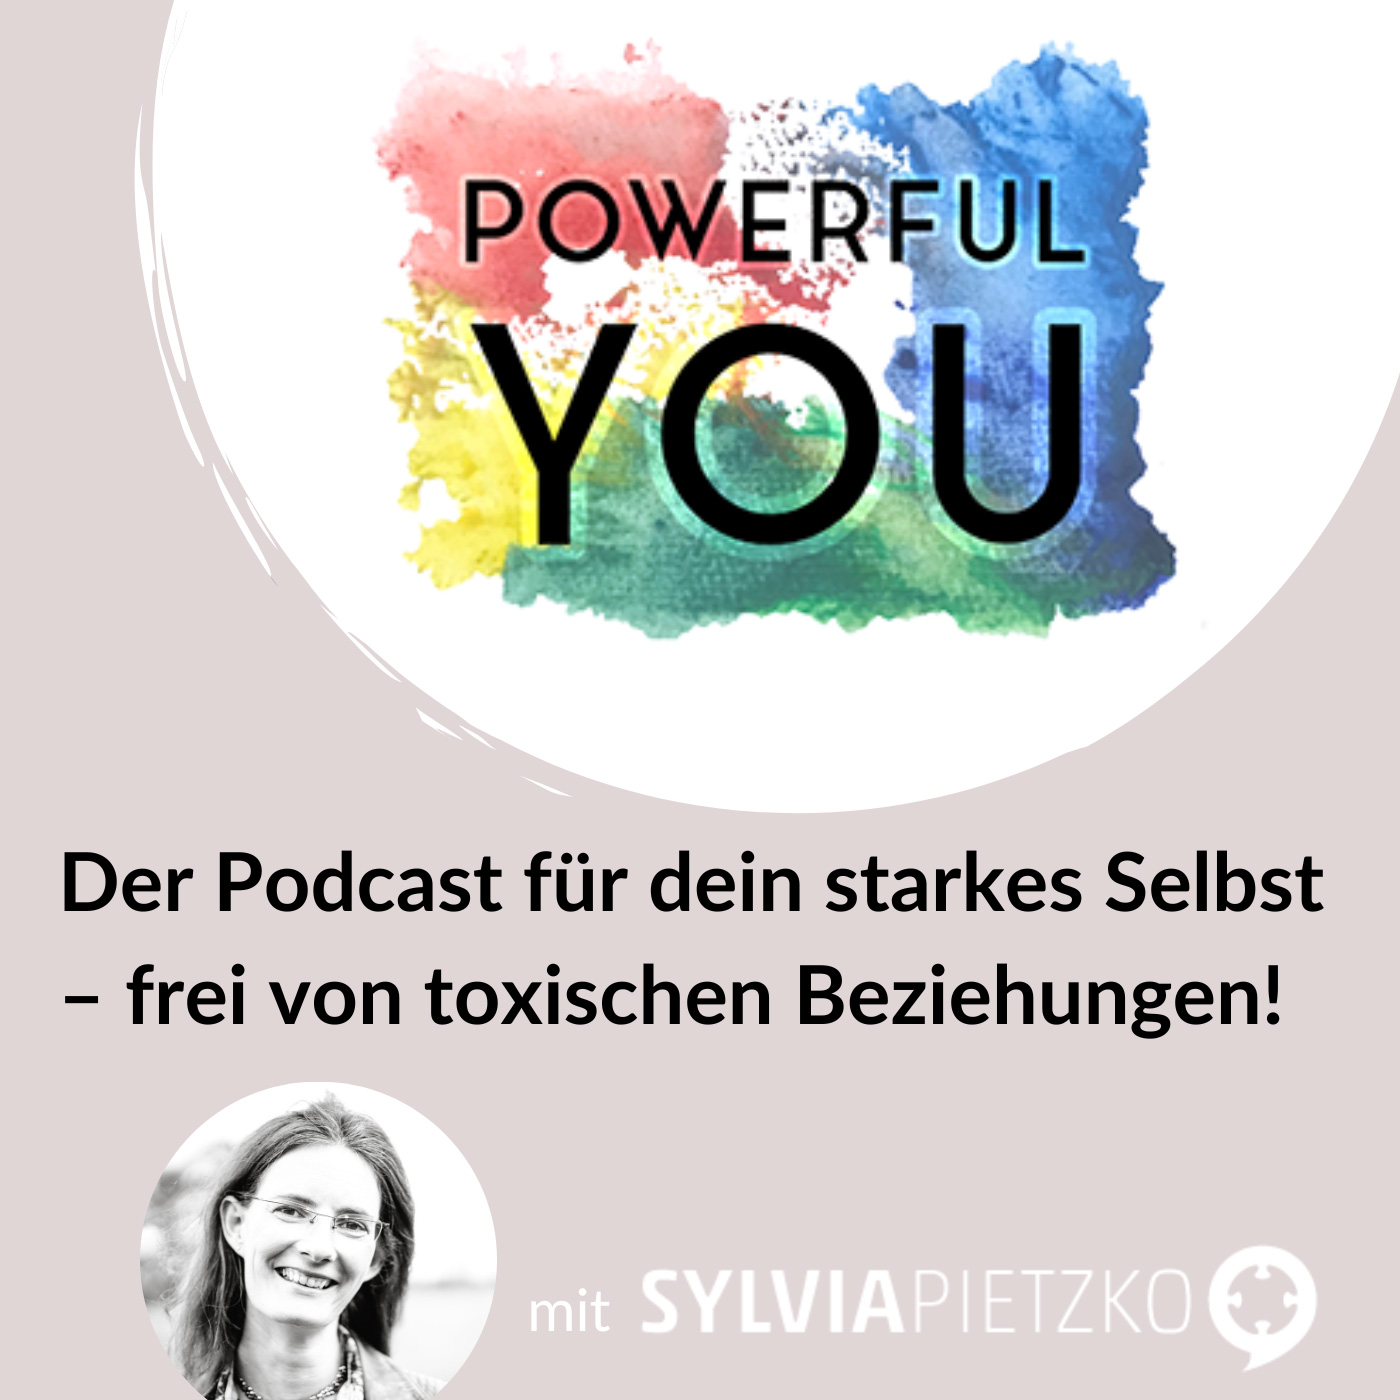 PowerfulYou - der Podcast von Sylvia Pietzko